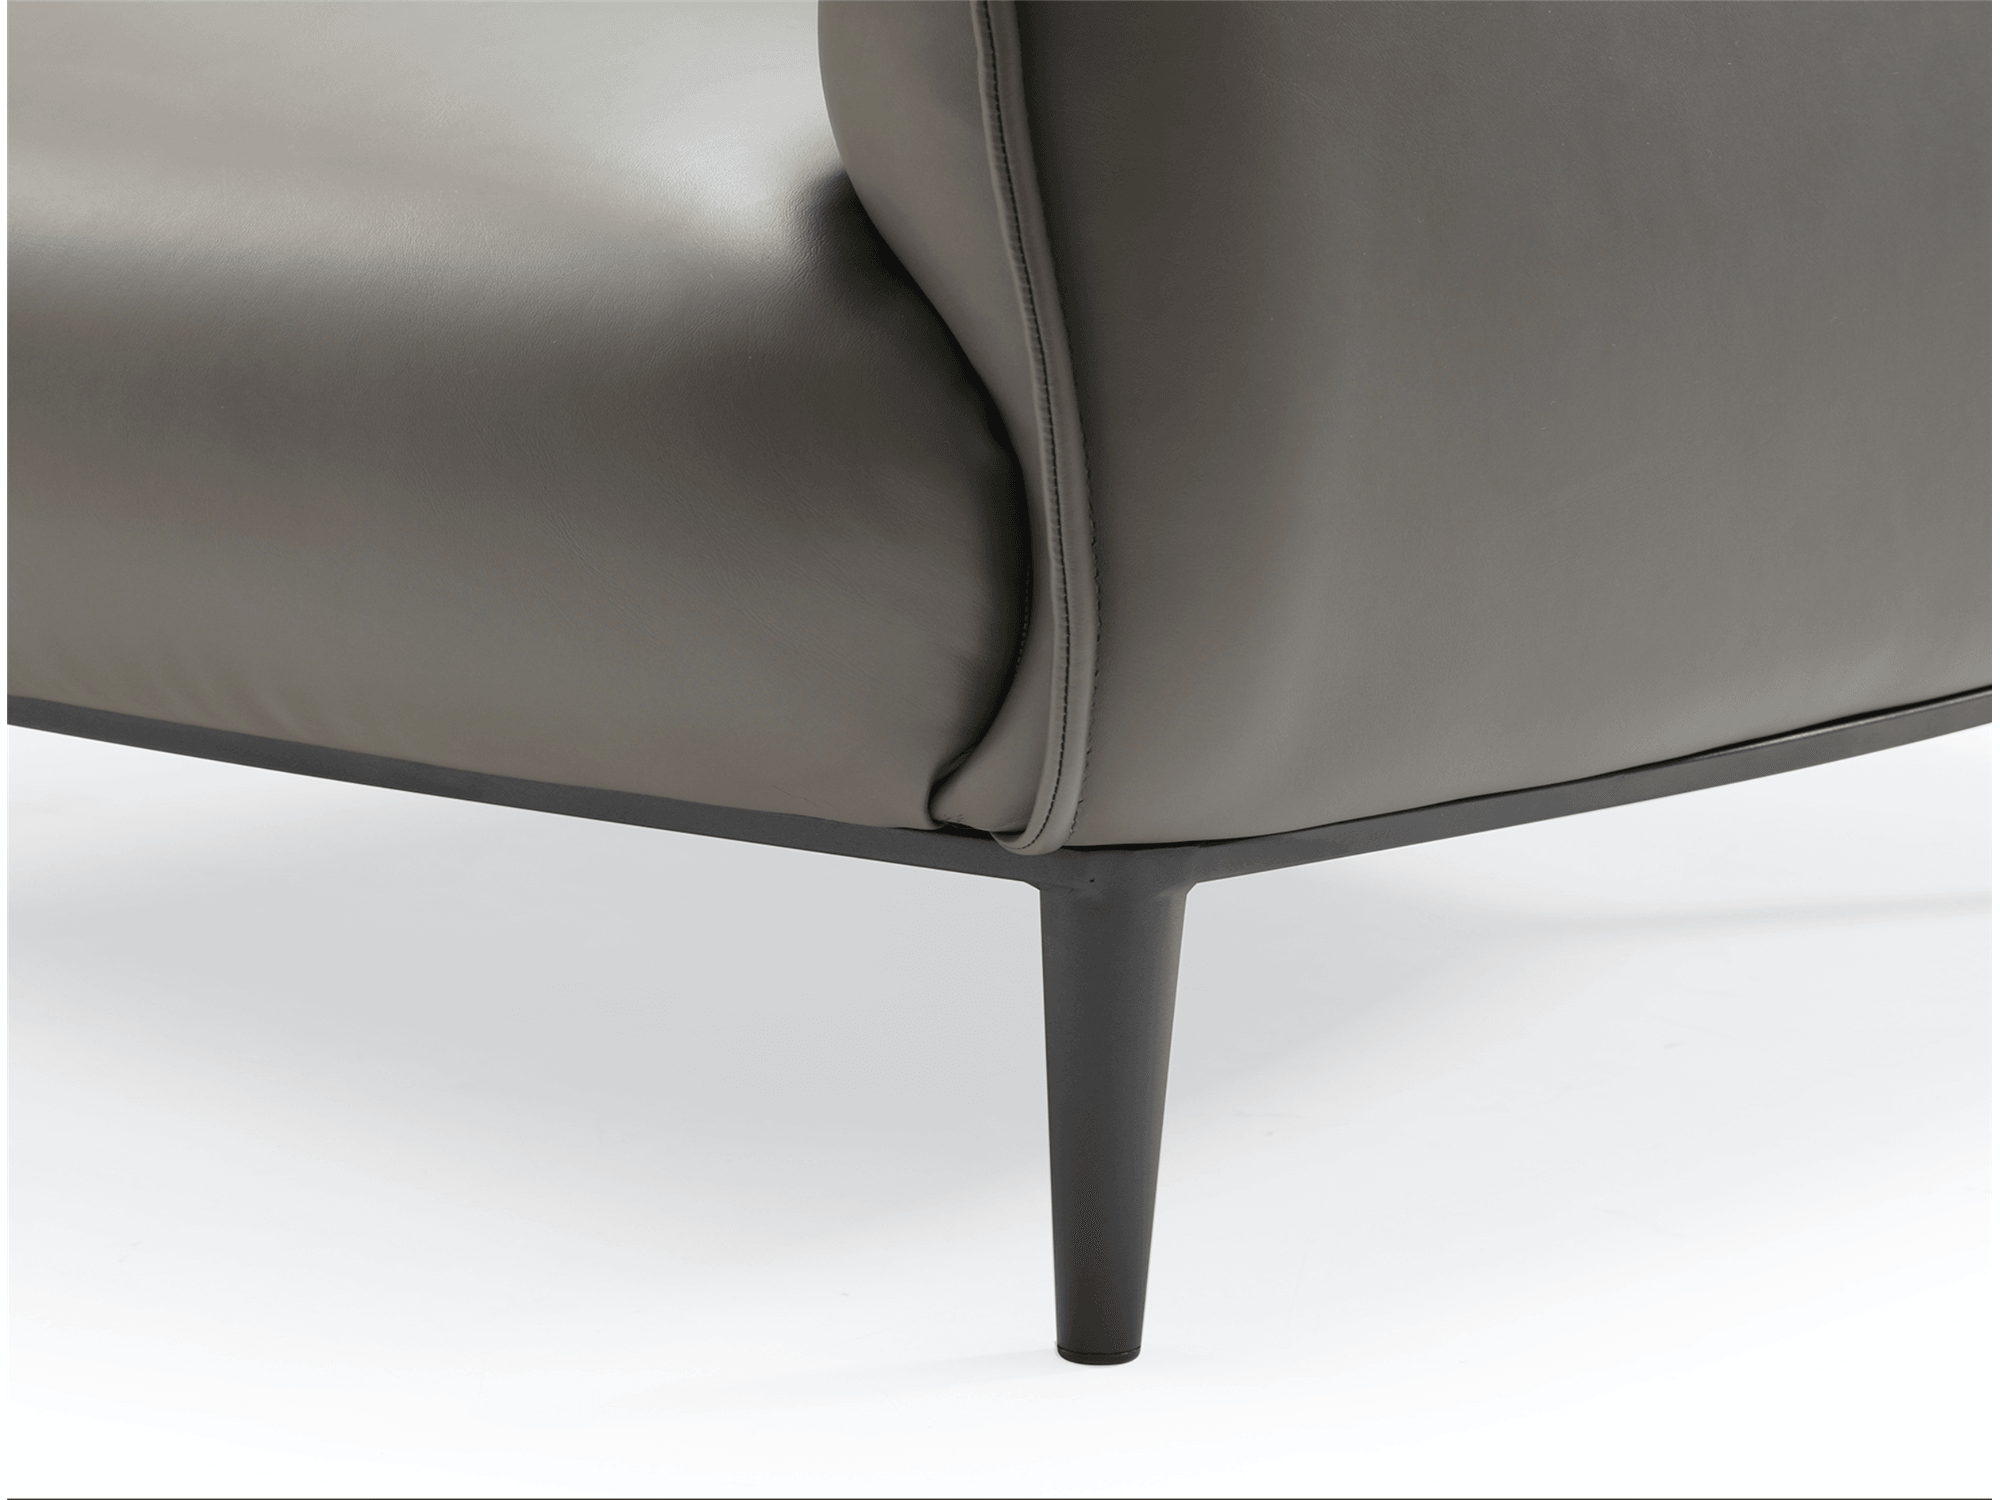 Ben Accent Chair - Euro Living Furniture